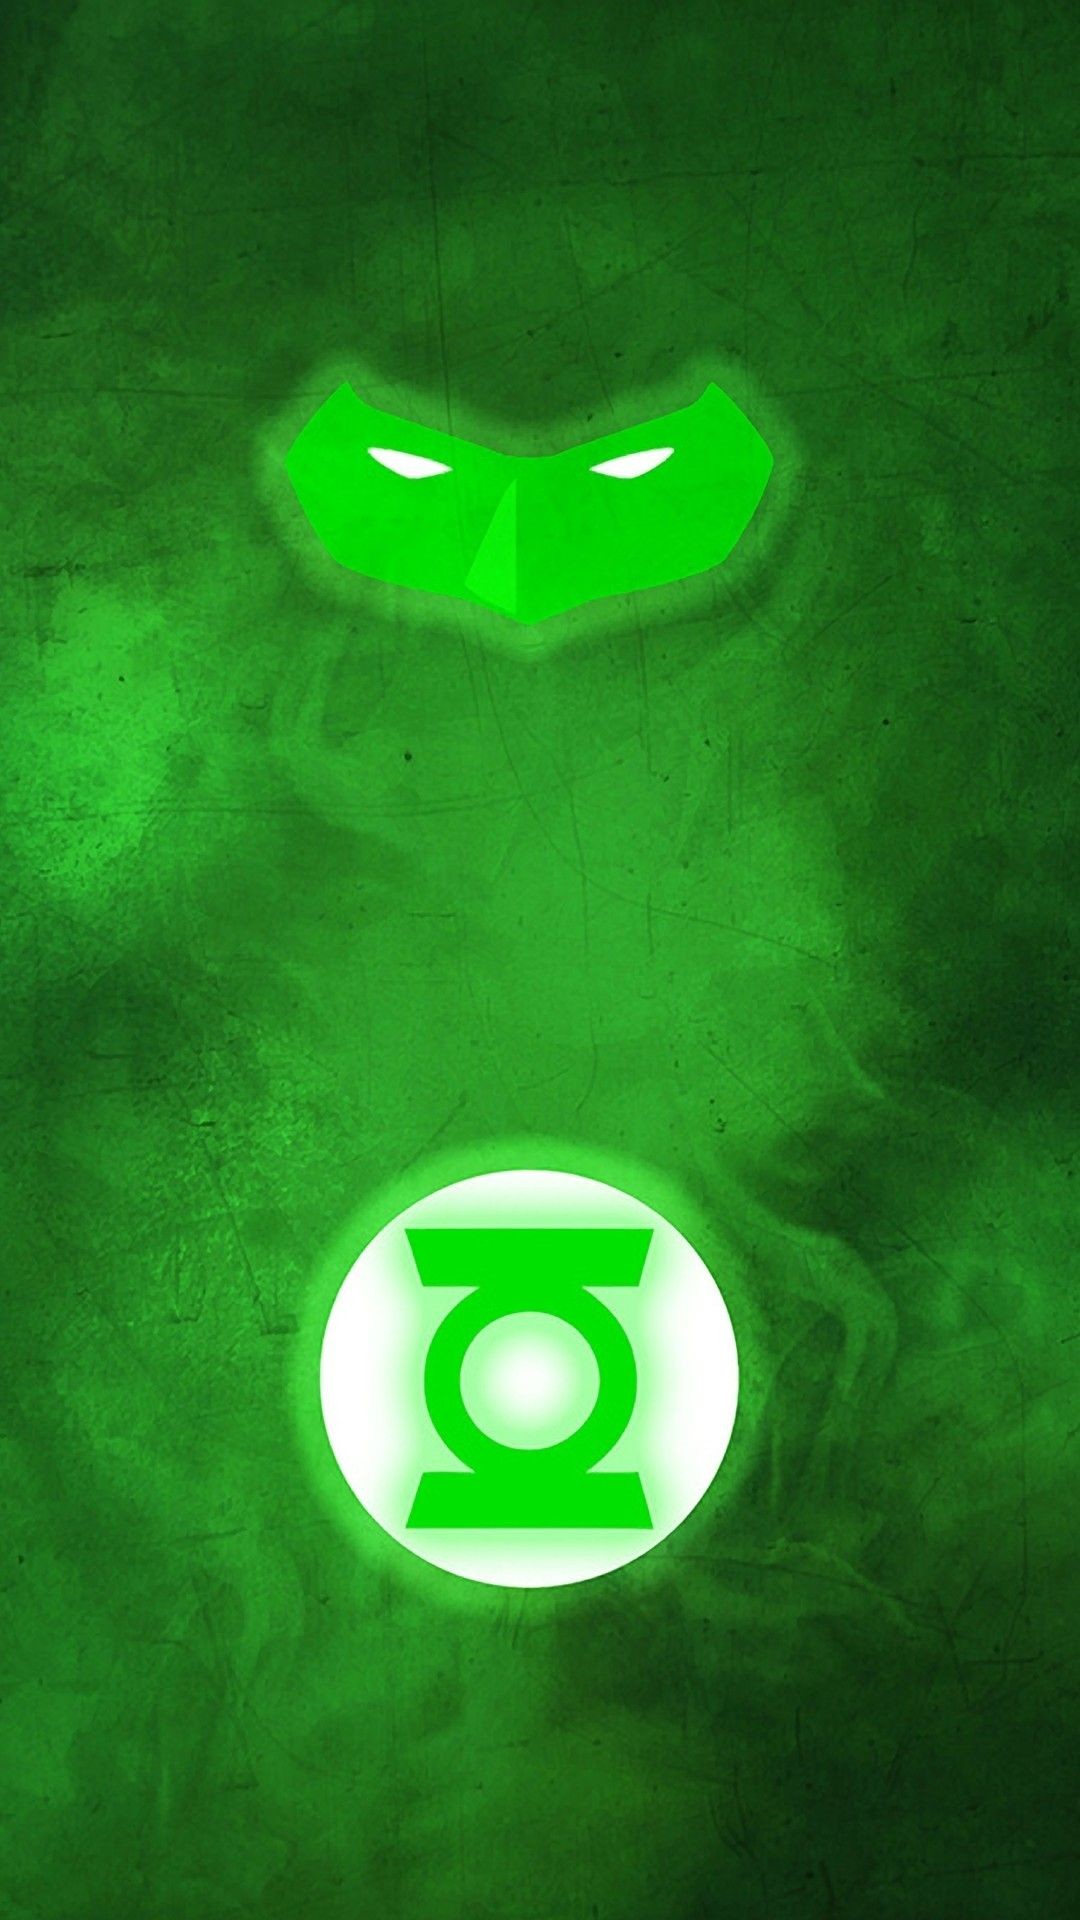 1080x1920 Green Lantern iPhone Wallpapers - Top Free Green Lantern iPhone .